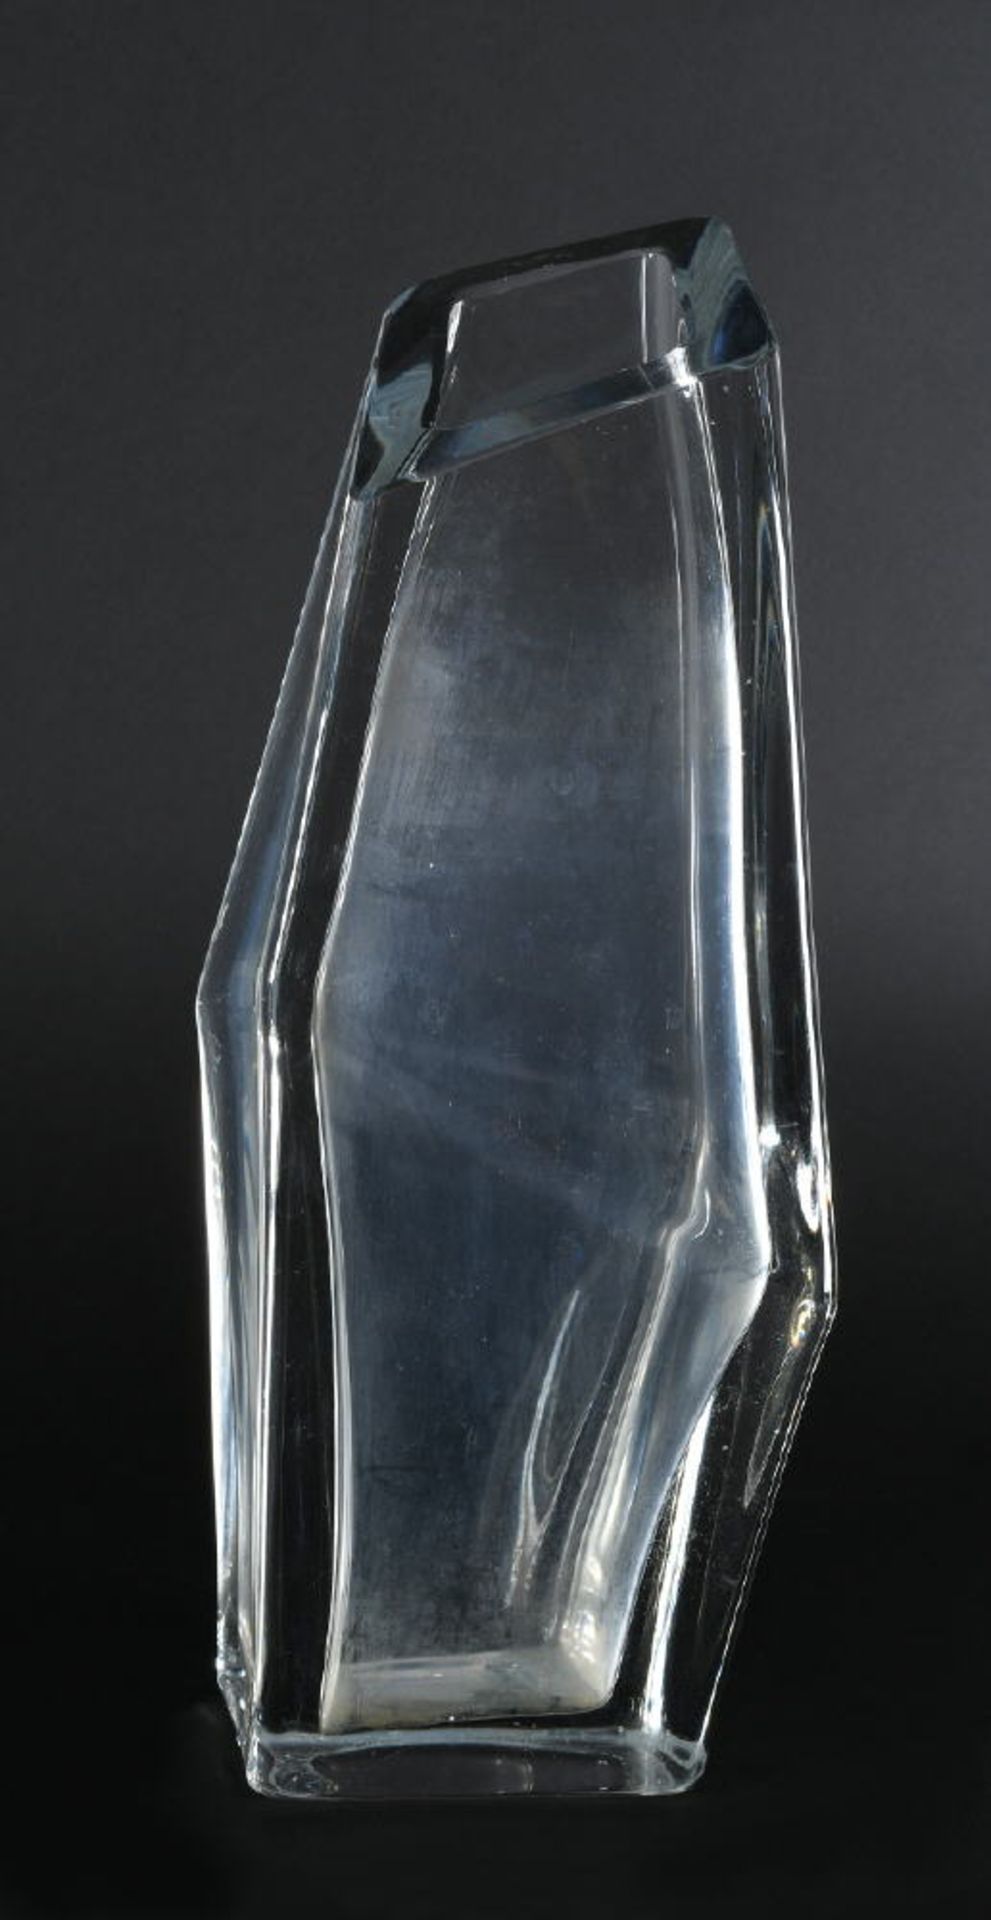 Vasefarbloses Kristall, Rautenform, H= 33 cm, Rand minim. best.Vasefarbloses Kristall, Rautenform,